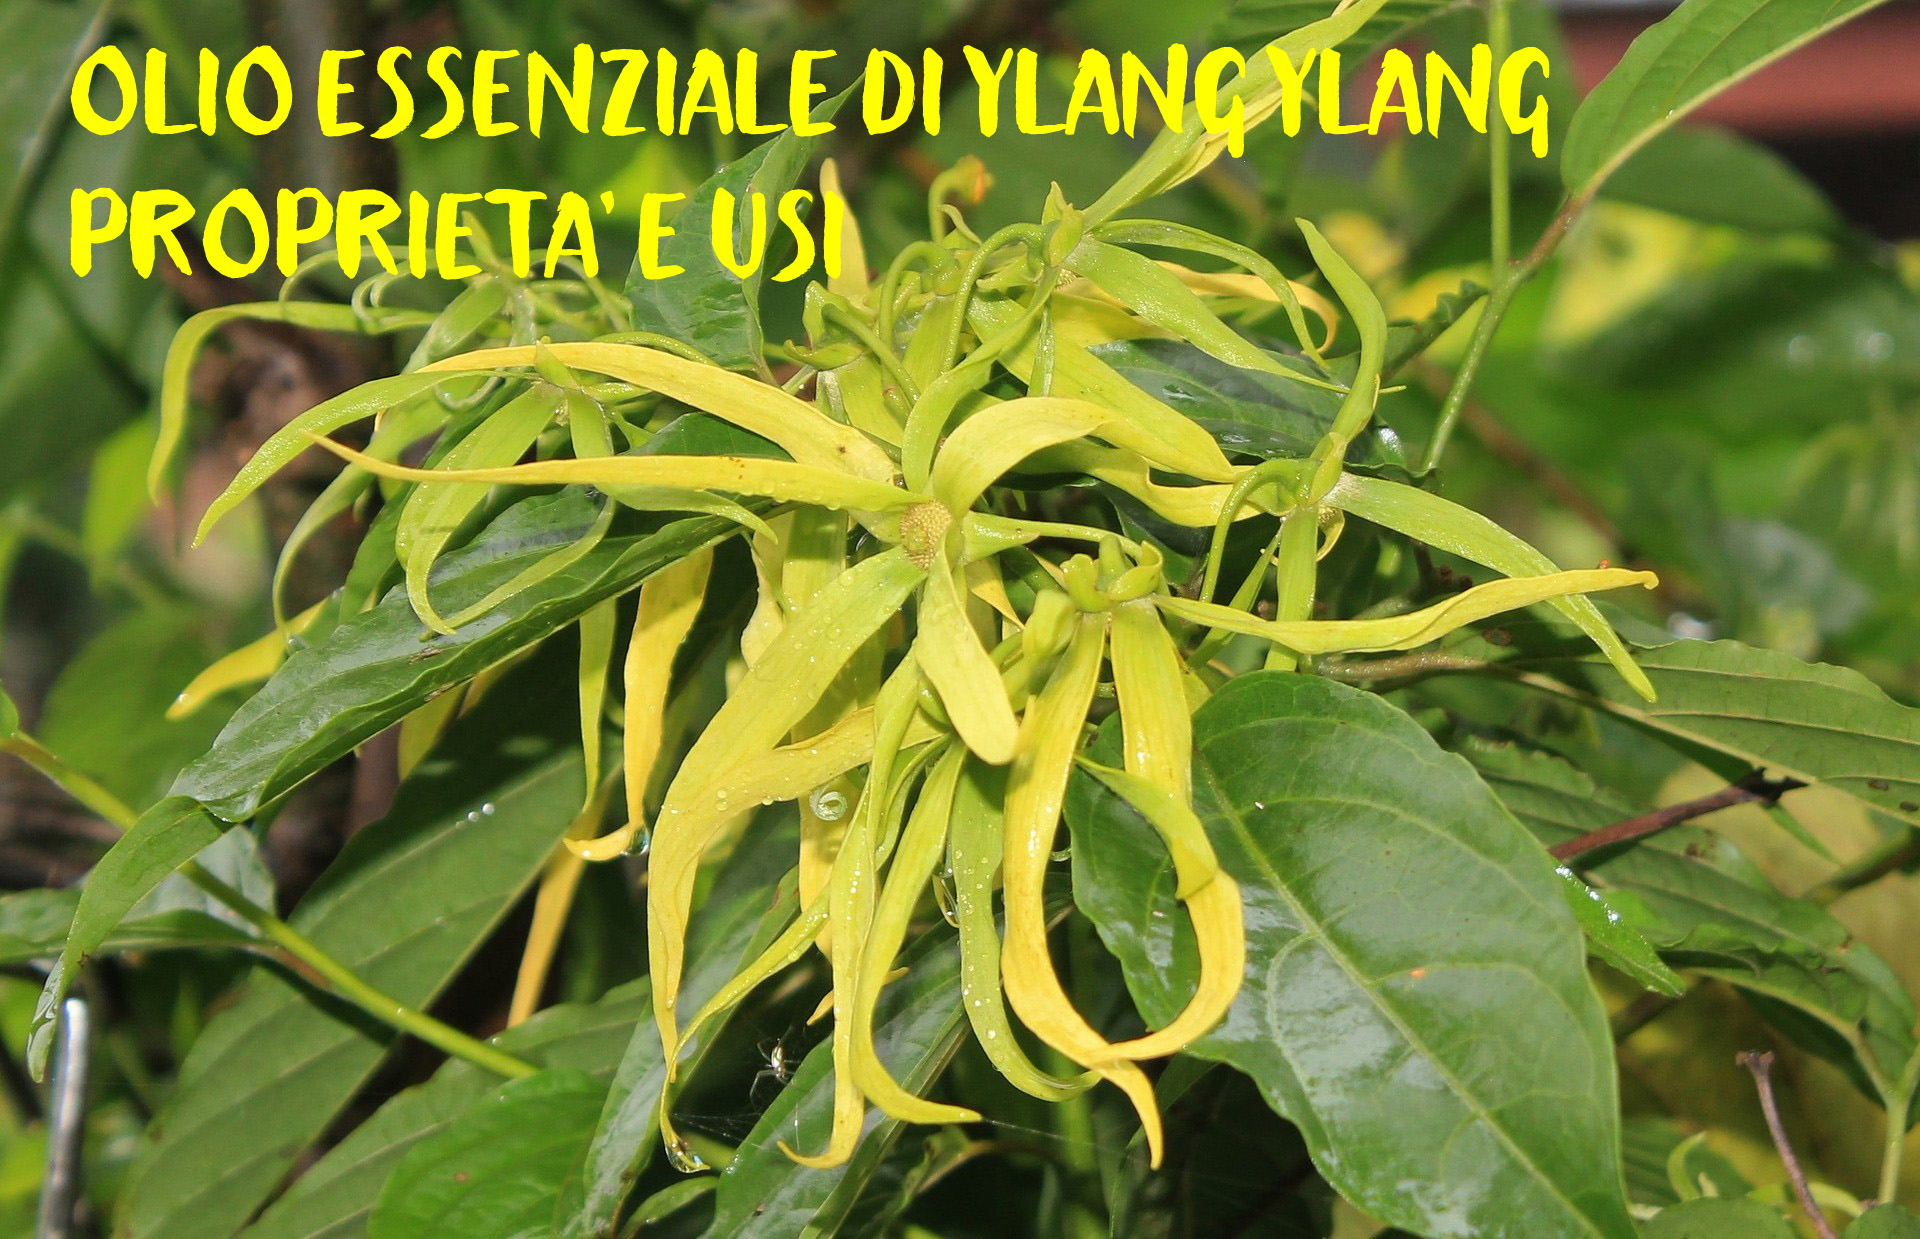 Olio essenziale di ylang ylang: proprietà e usi